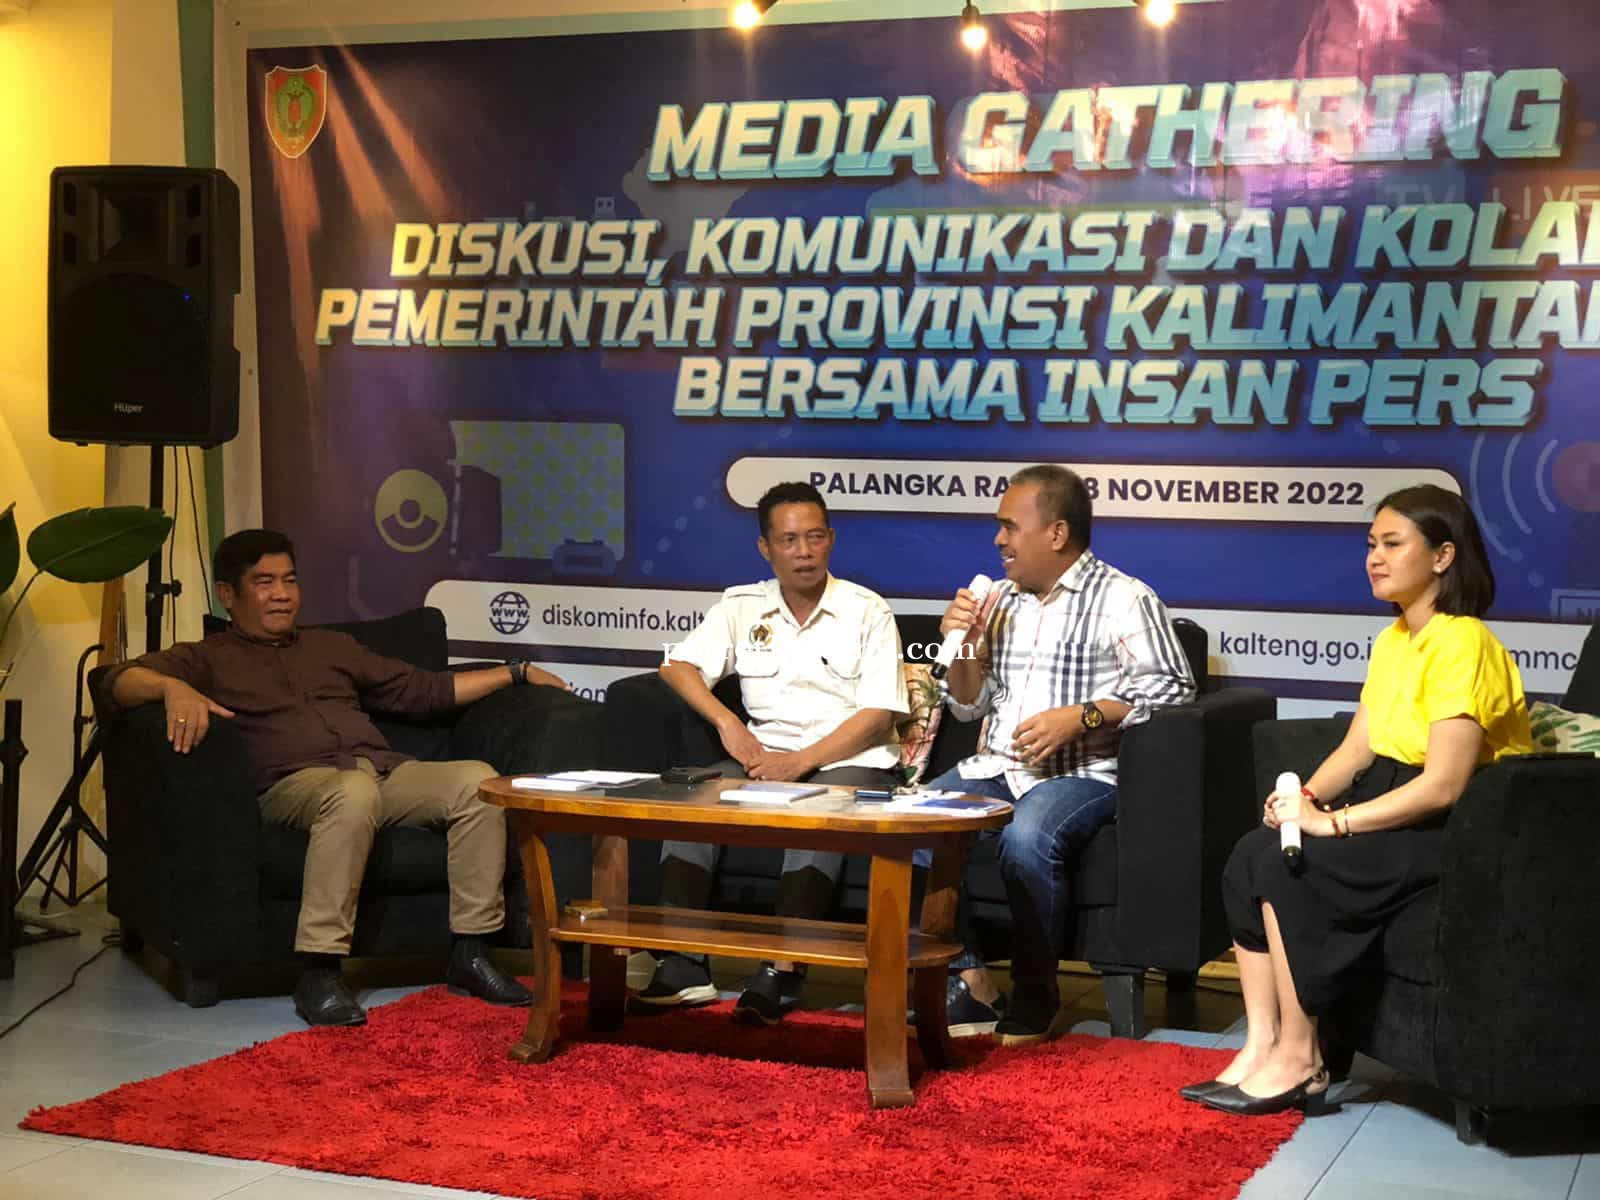 Diskominfosantik Prov. Kalteng Gelar Media Gathering Bersama Insan Pers di Kalteng 